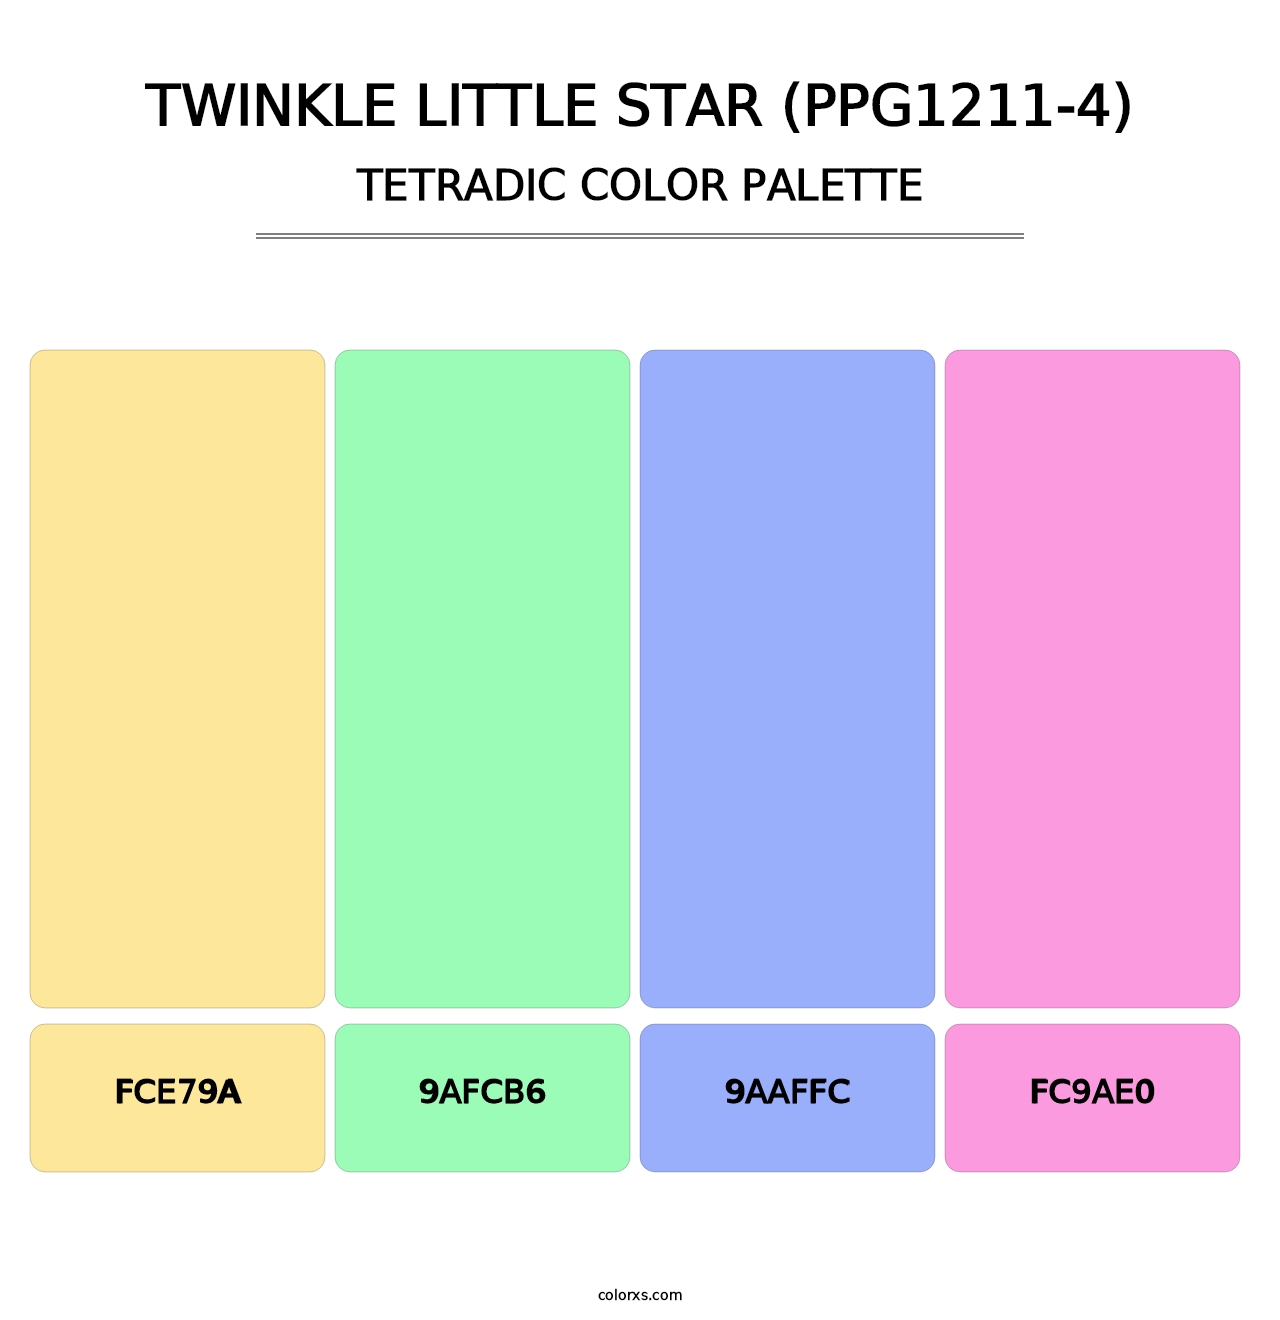 Twinkle Little Star (PPG1211-4) - Tetradic Color Palette